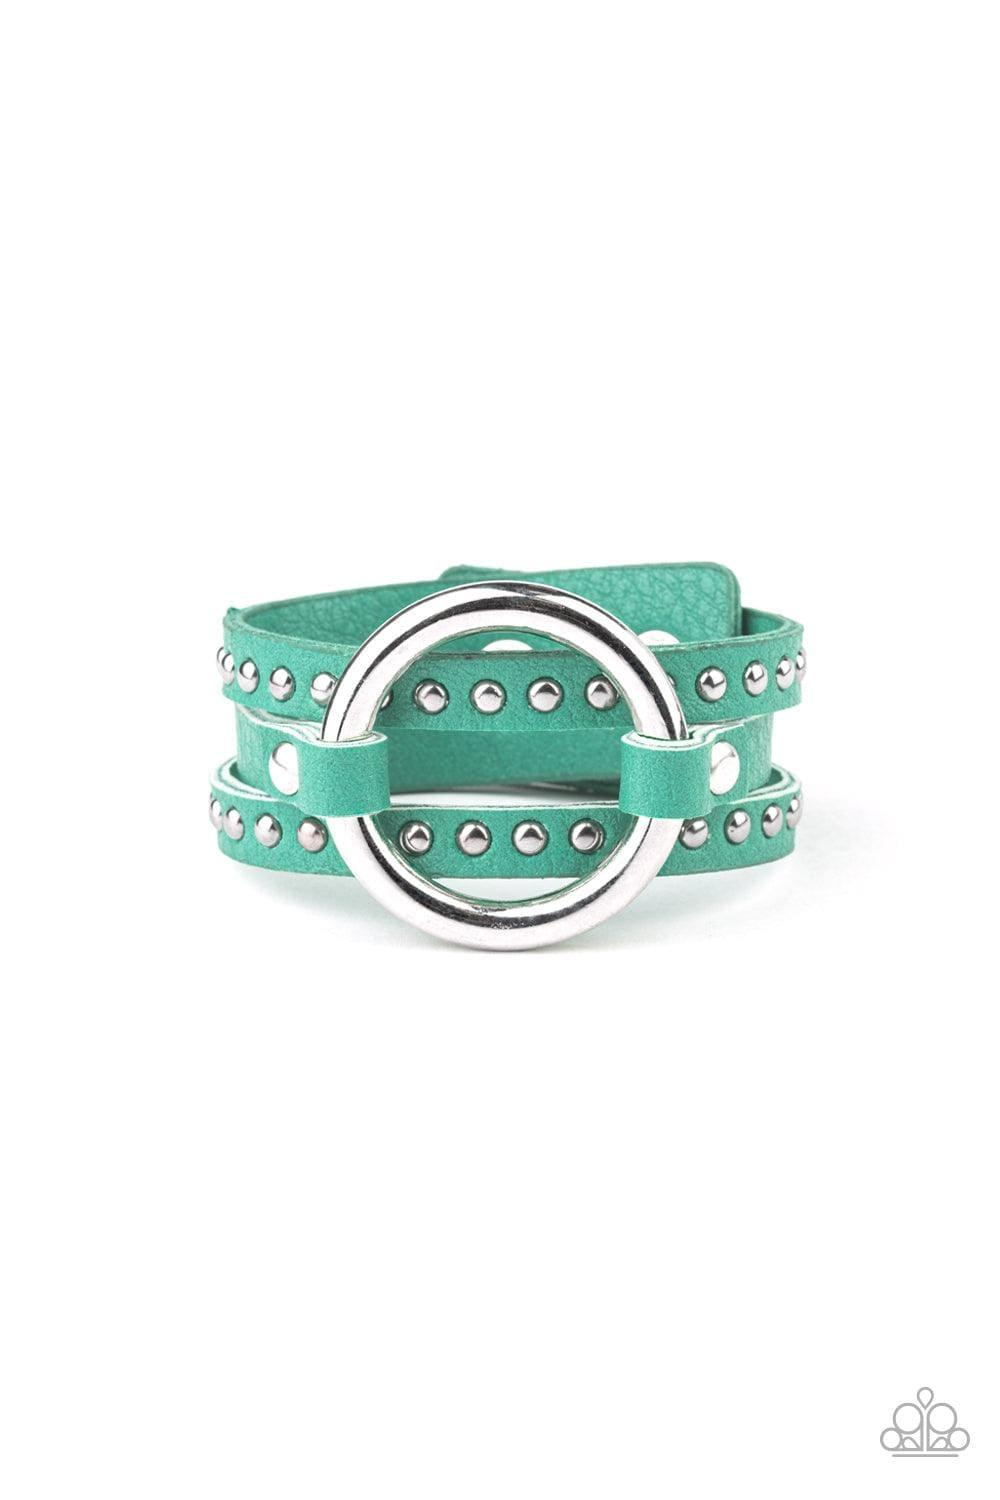 Paparazzi Accessories - Studded Statement-maker - Green Bracelet - Bling by JessieK